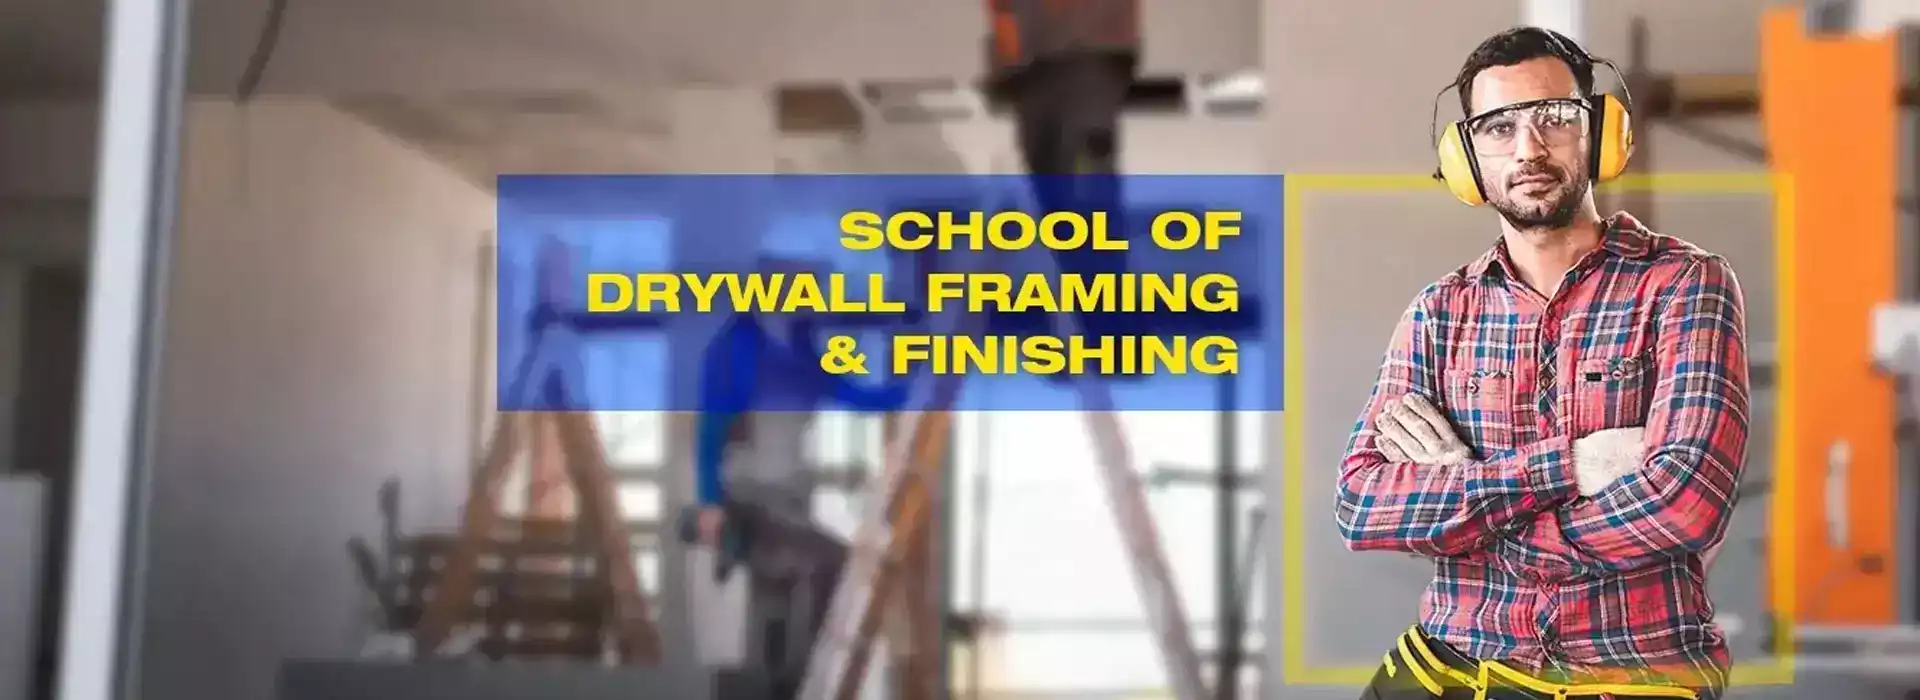 Drywall Framing and Finishing Program